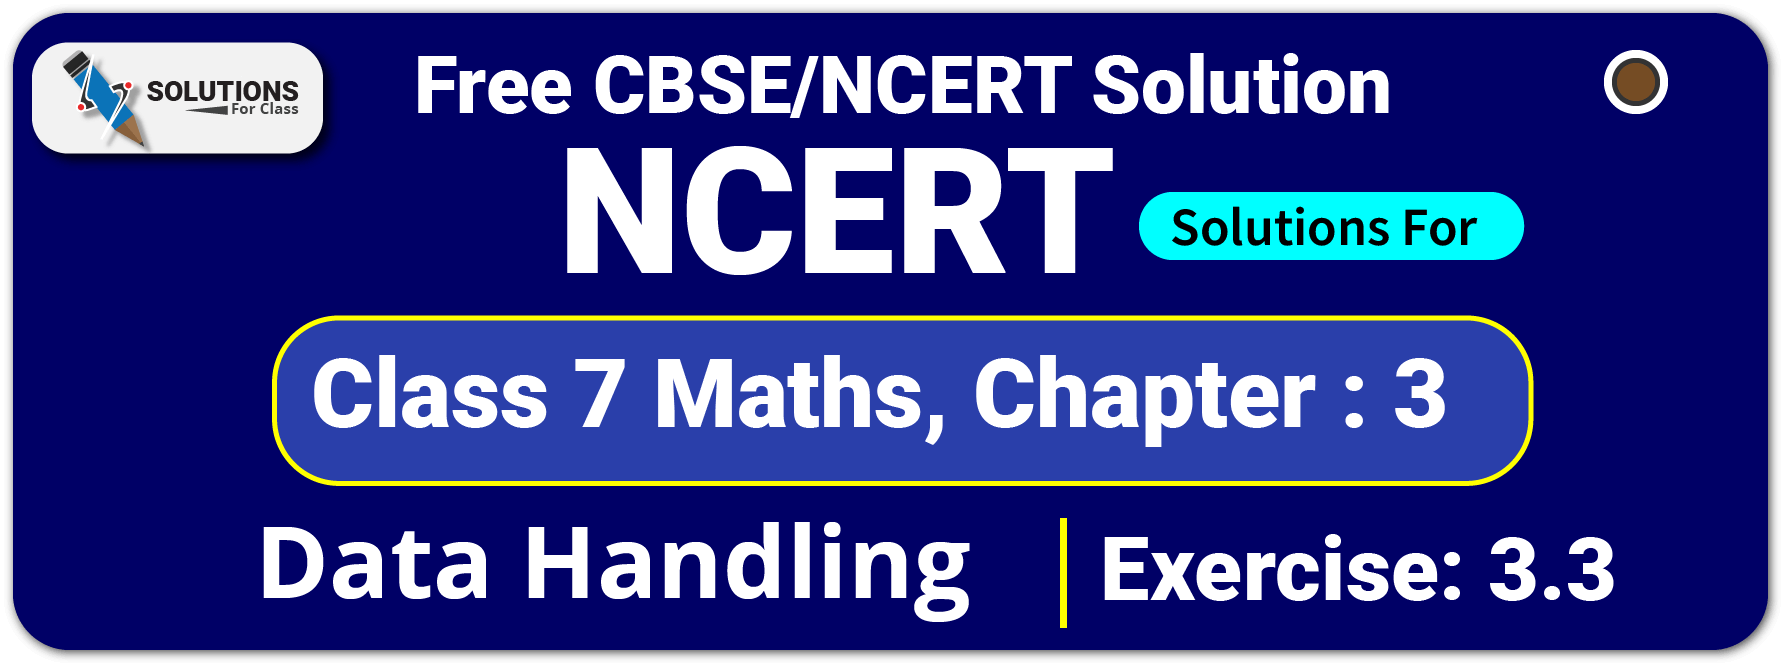 NCERT Solutions For Class 7 Maths Chapter 3, Data Handling, Exercise 3.3